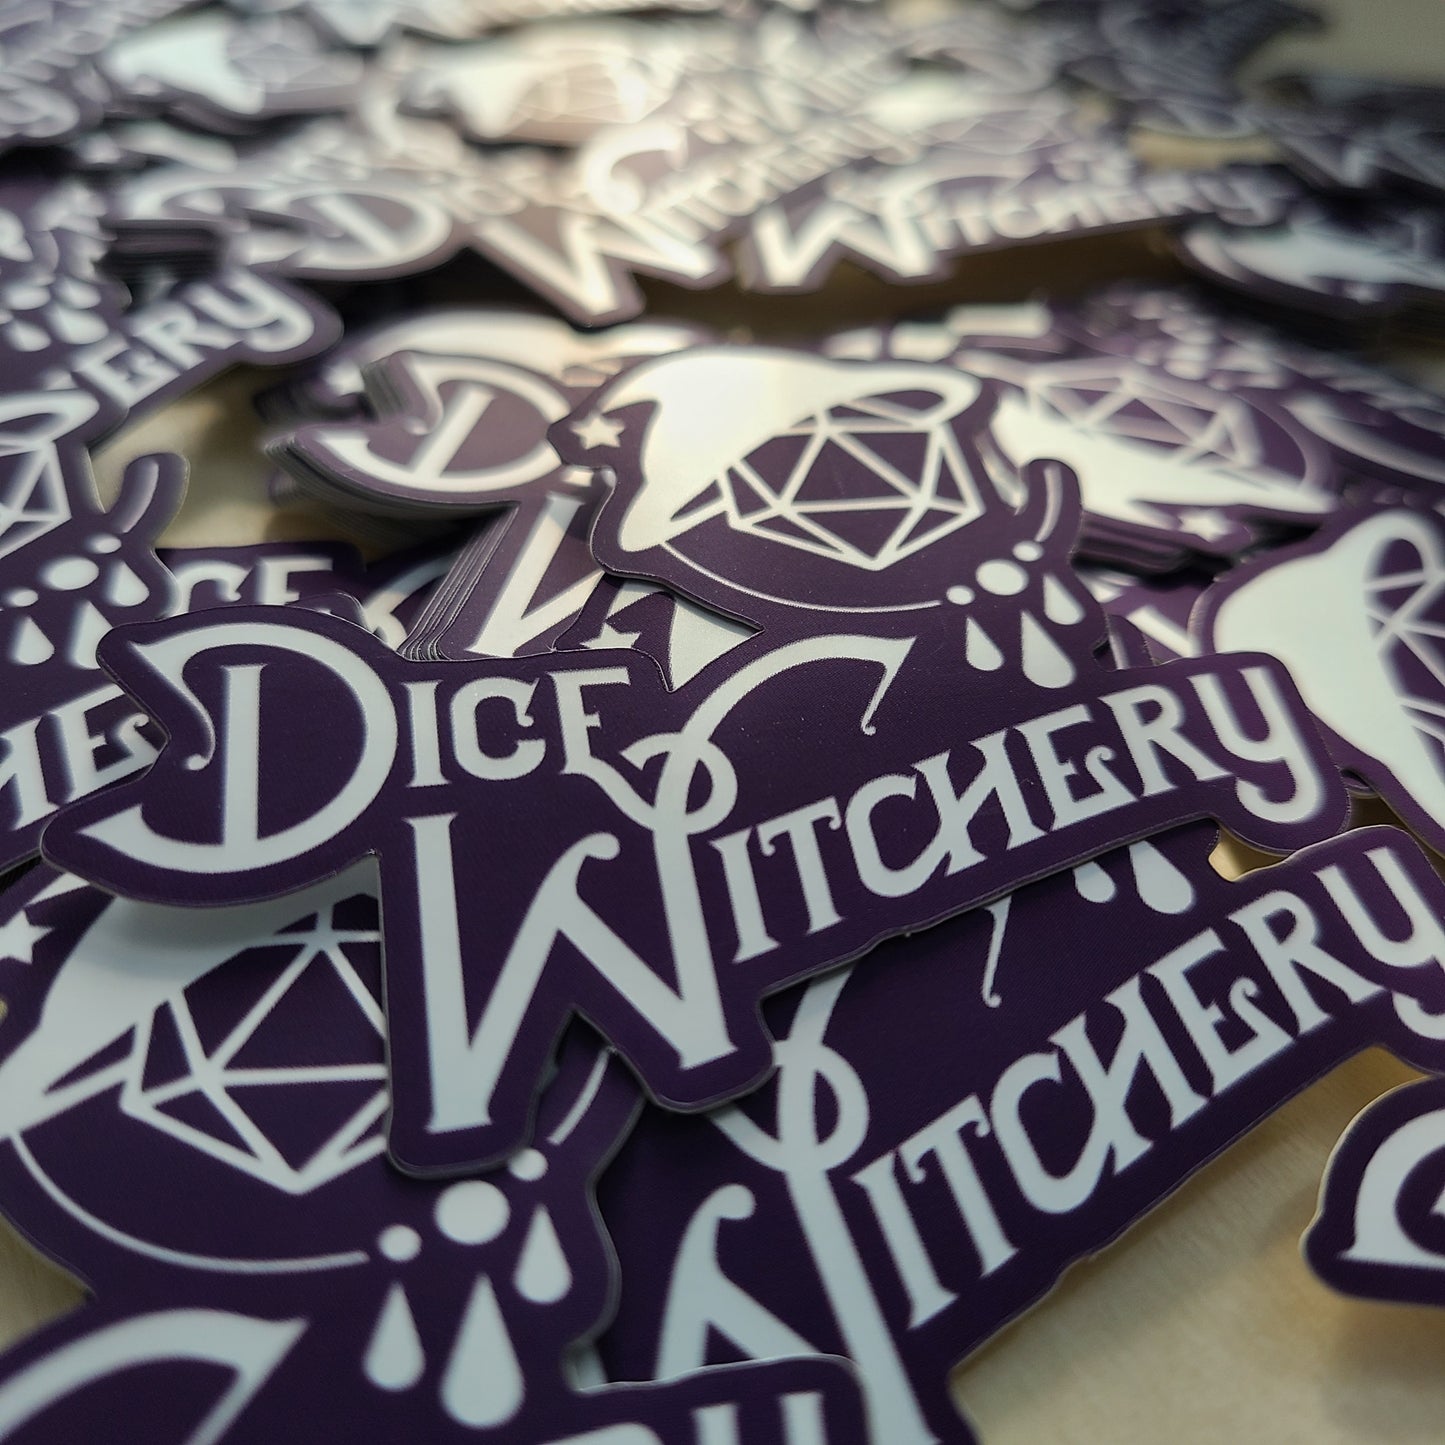 Dice Witchery matte logo sticker